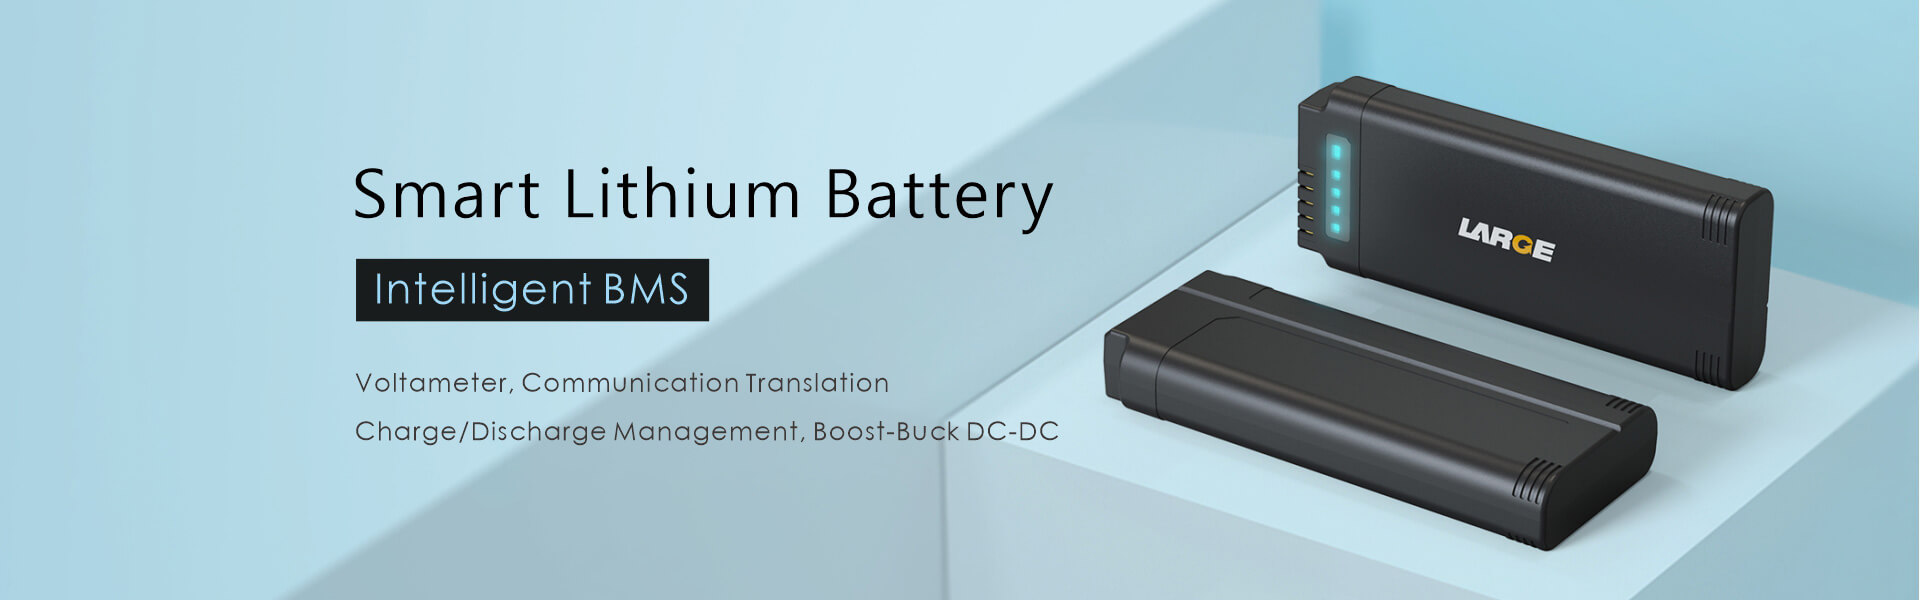 Smart-Lithium-Battery